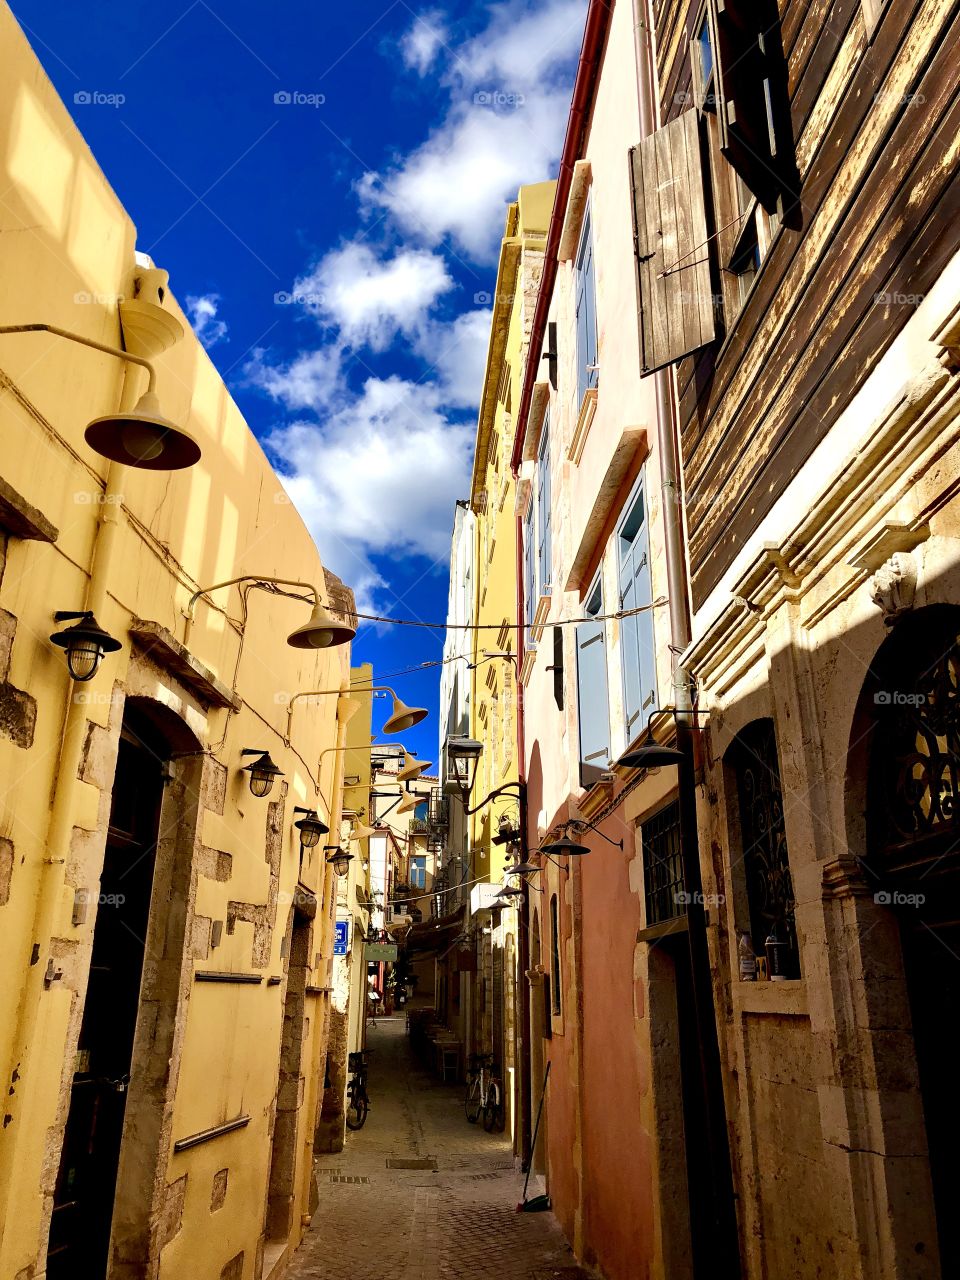 Street in Chania Greece